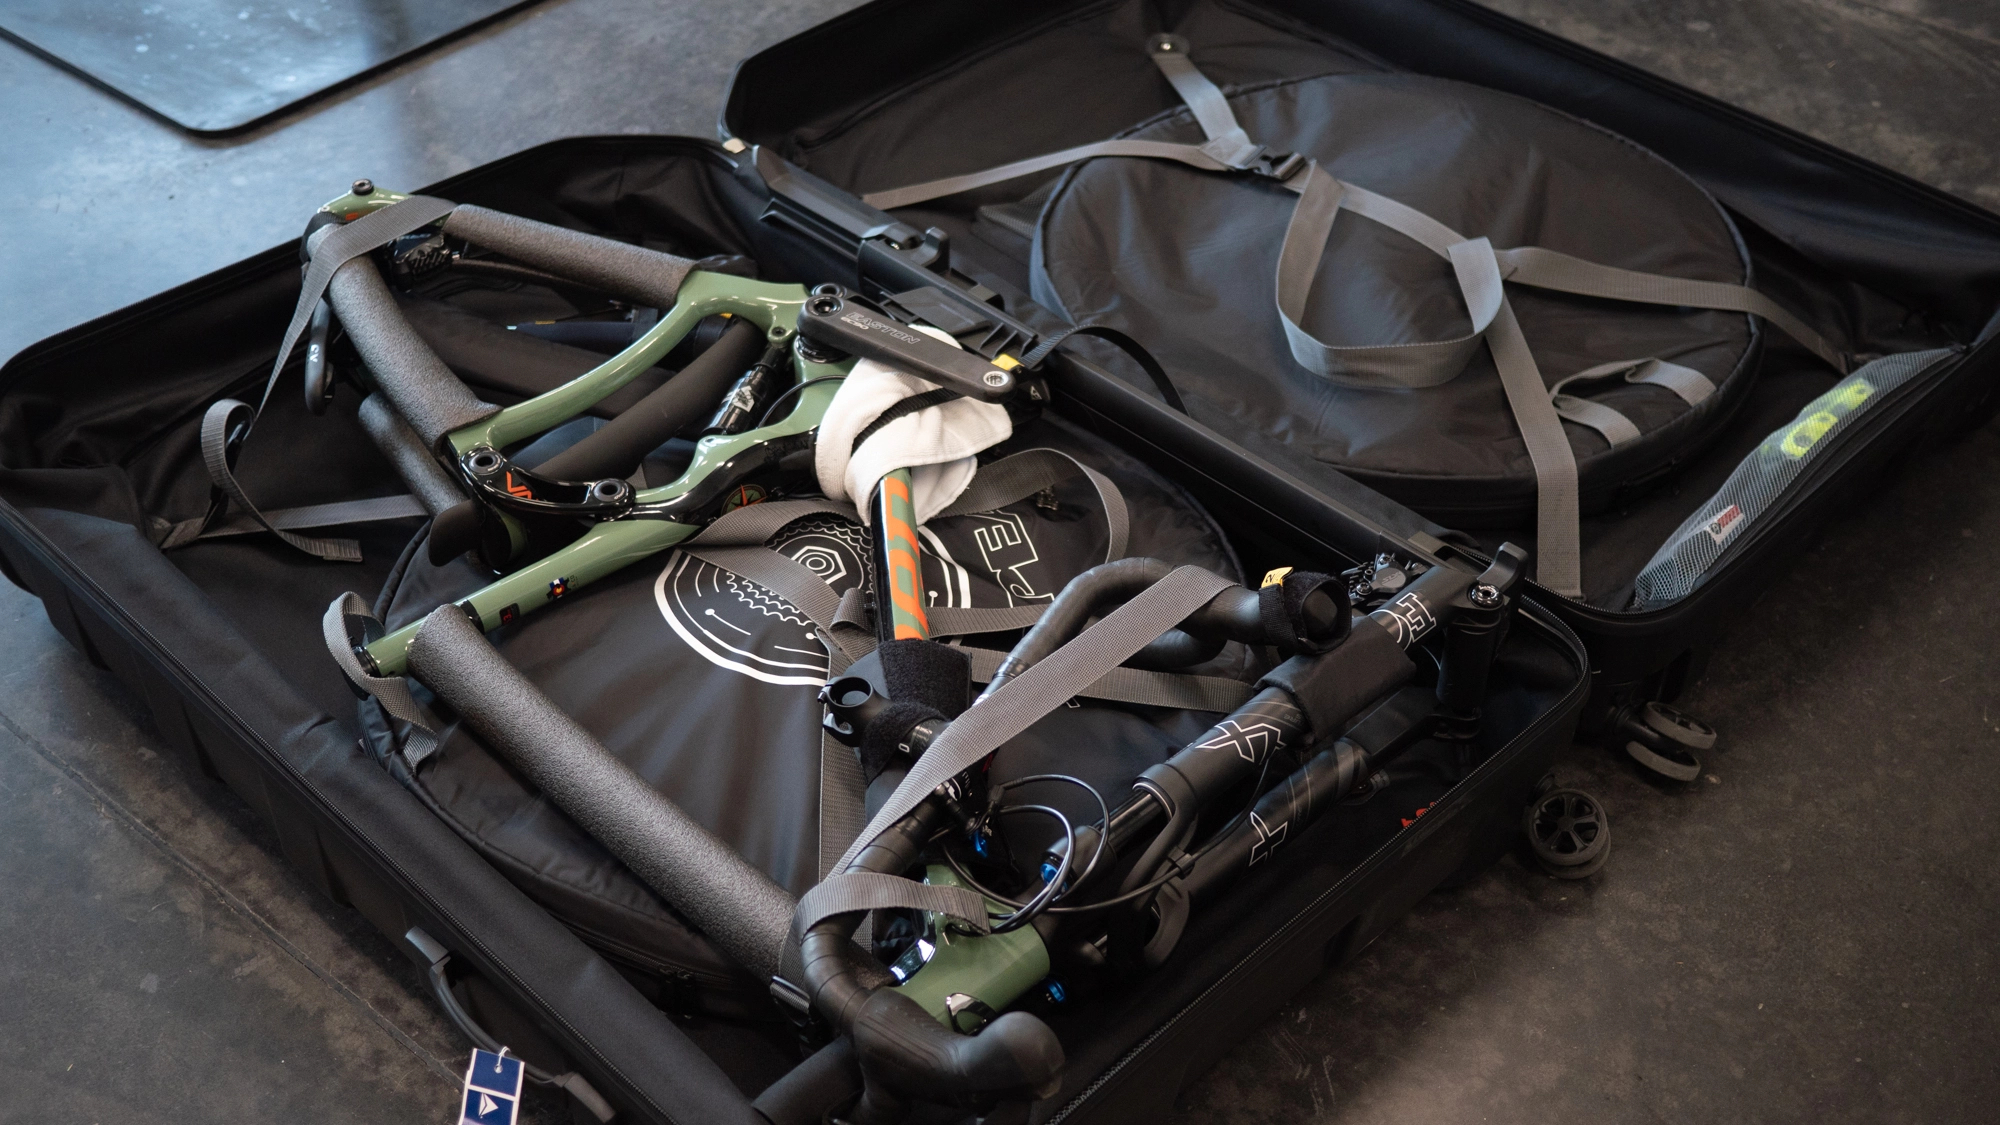 Details more than 160 bike travel bags uk super hot